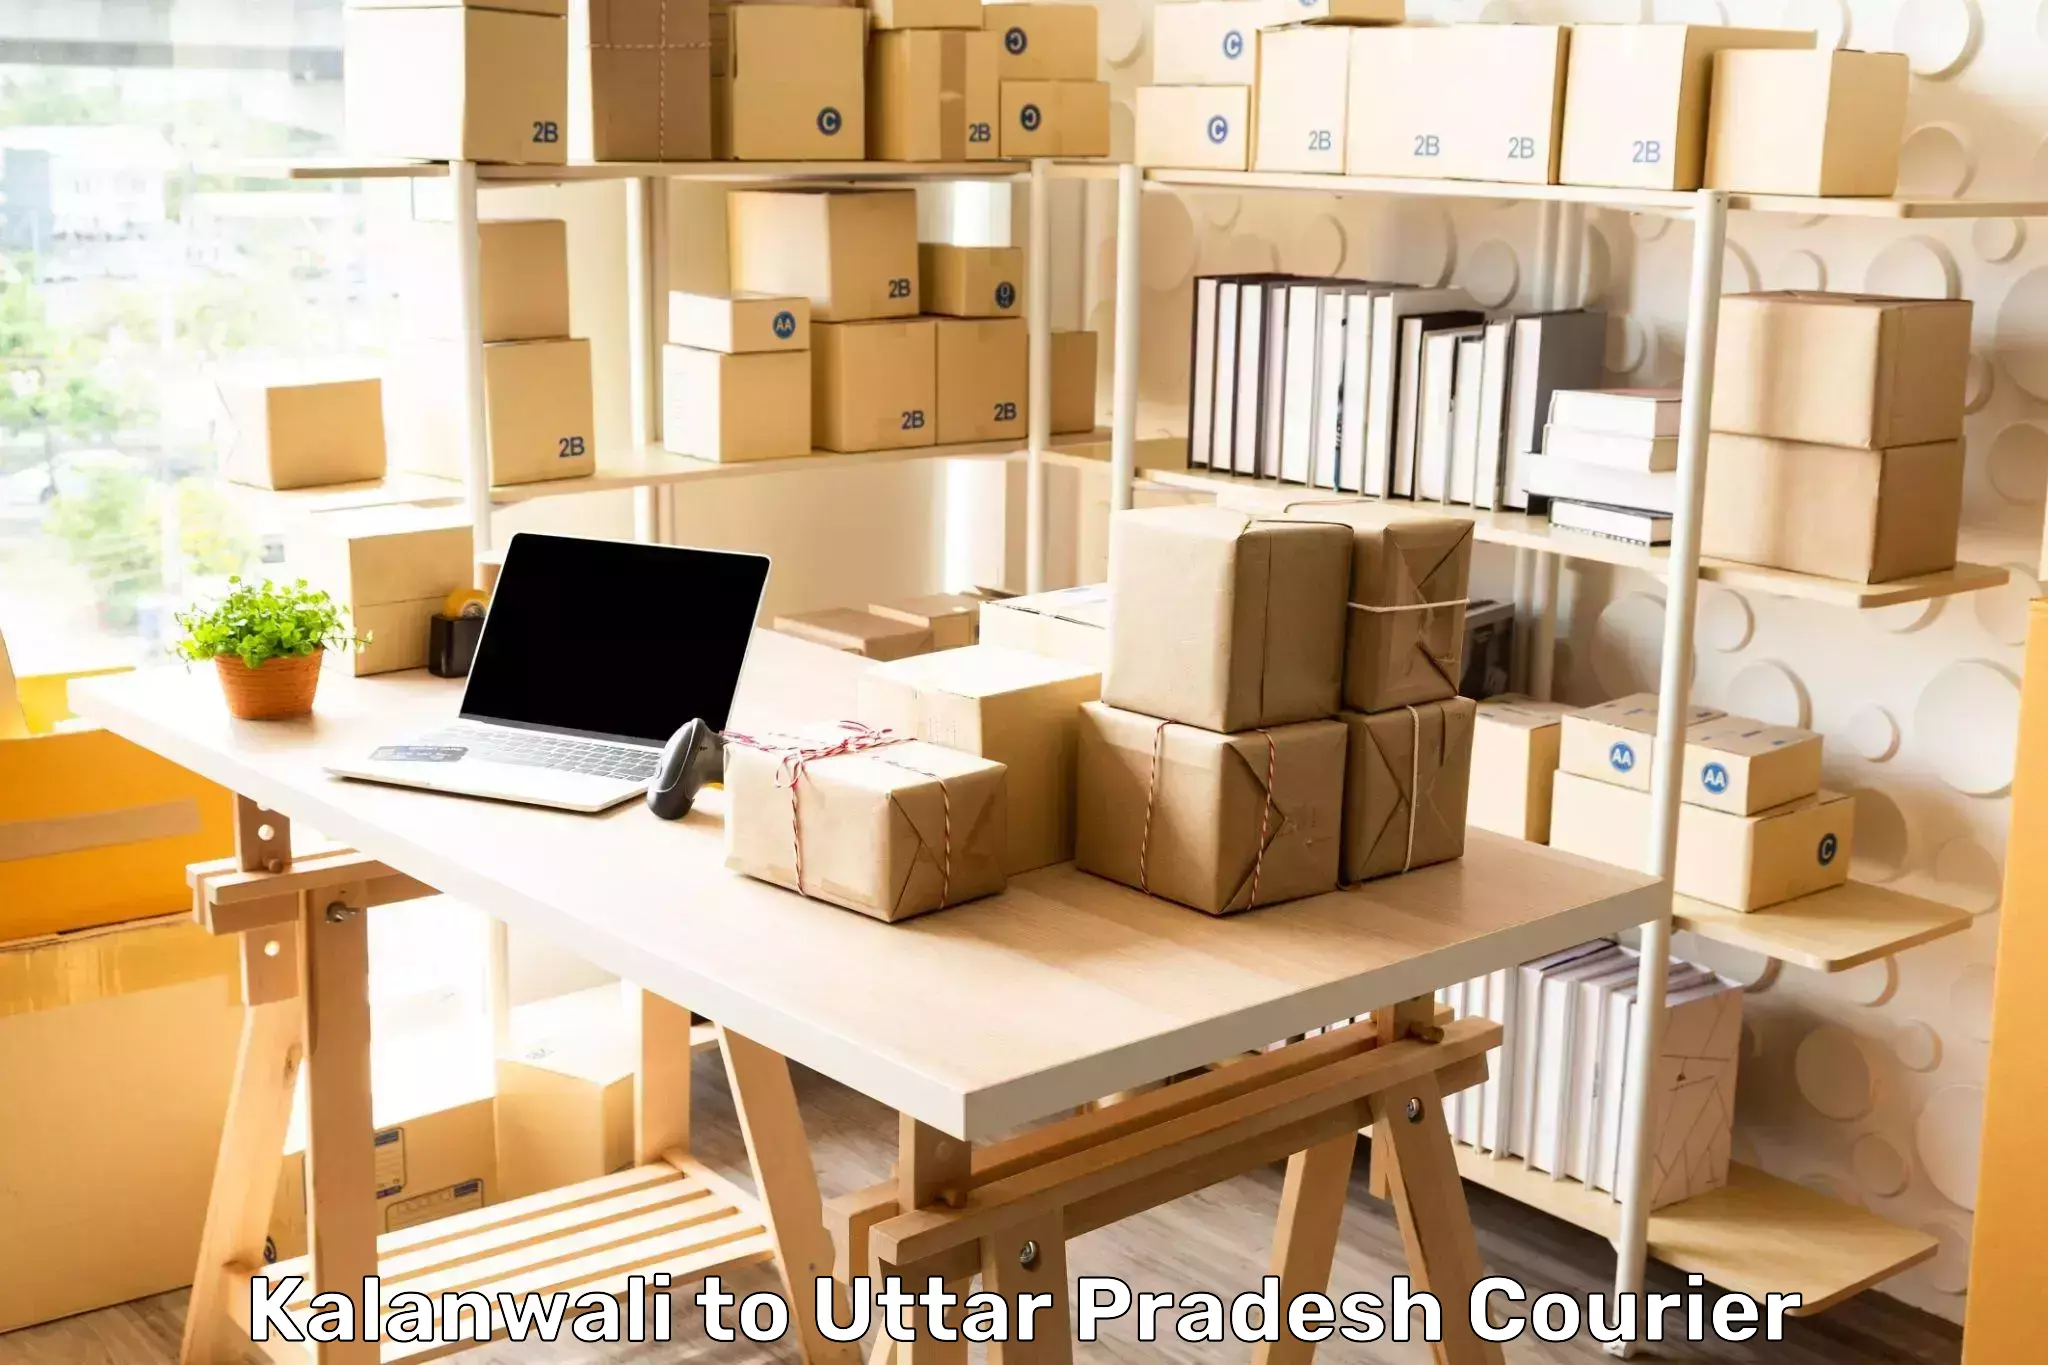 24-hour delivery options Kalanwali to Uttar Pradesh